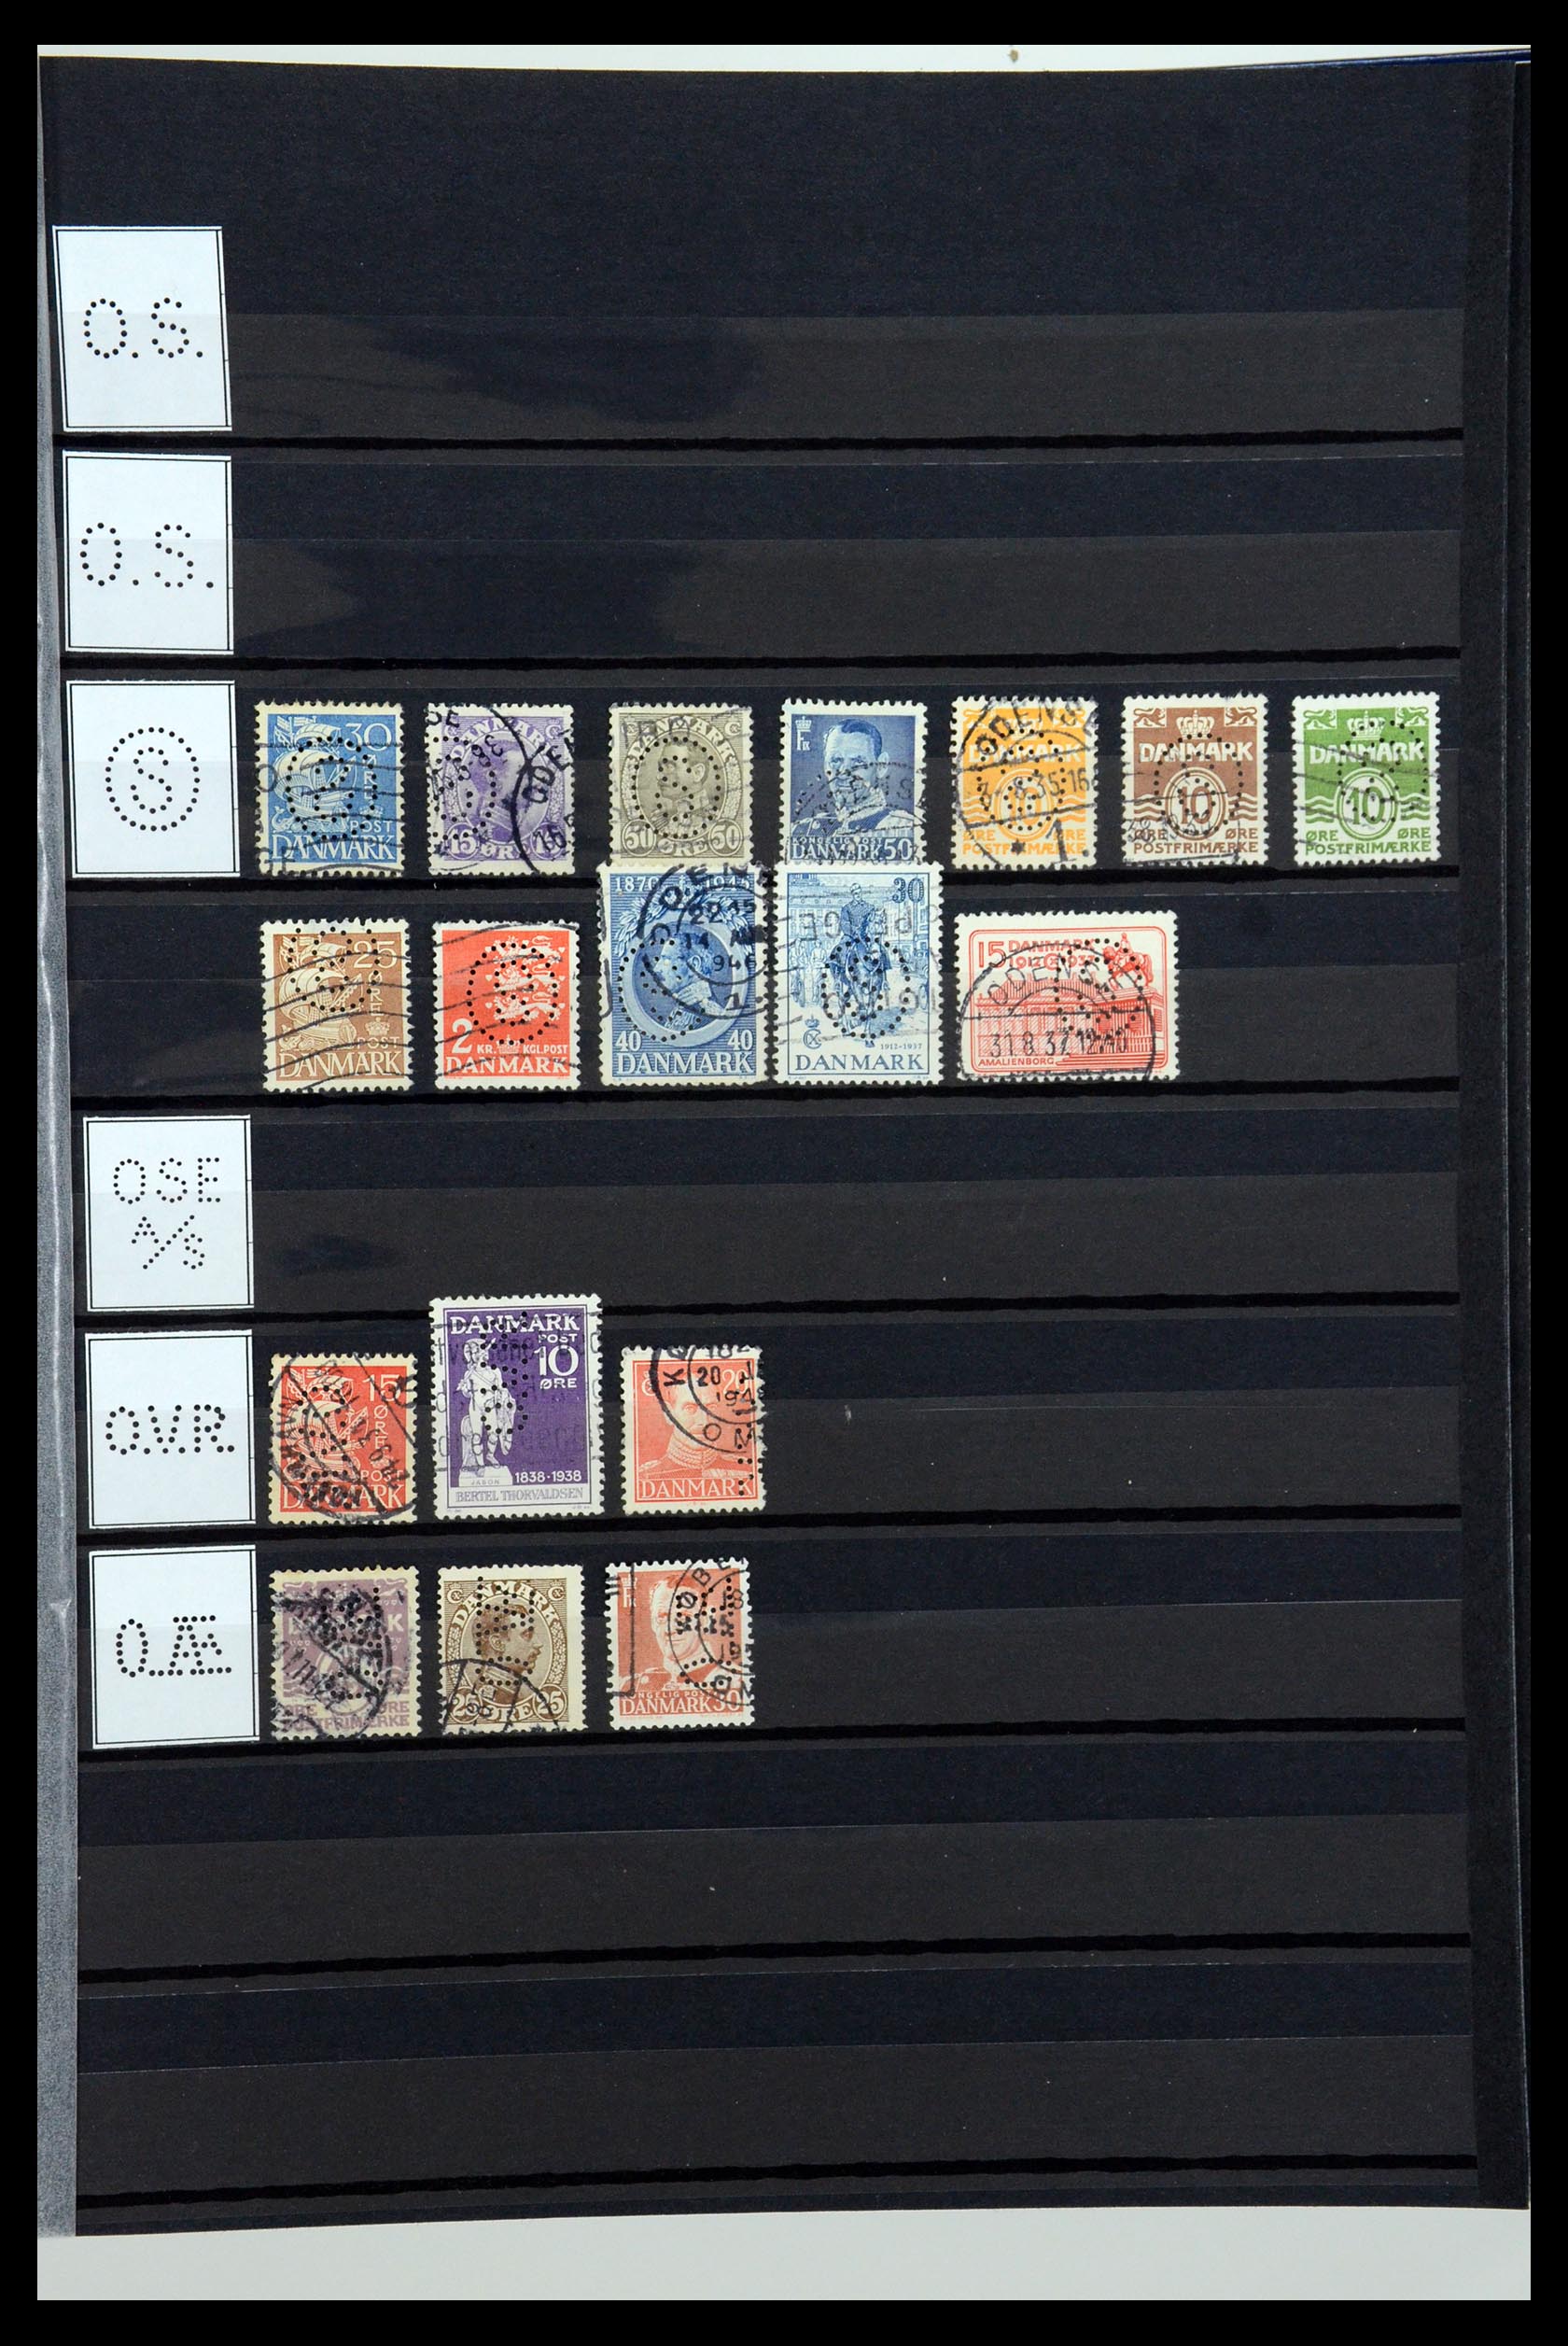 36396 188 - Stamp collection 36396 Denmark perfins.